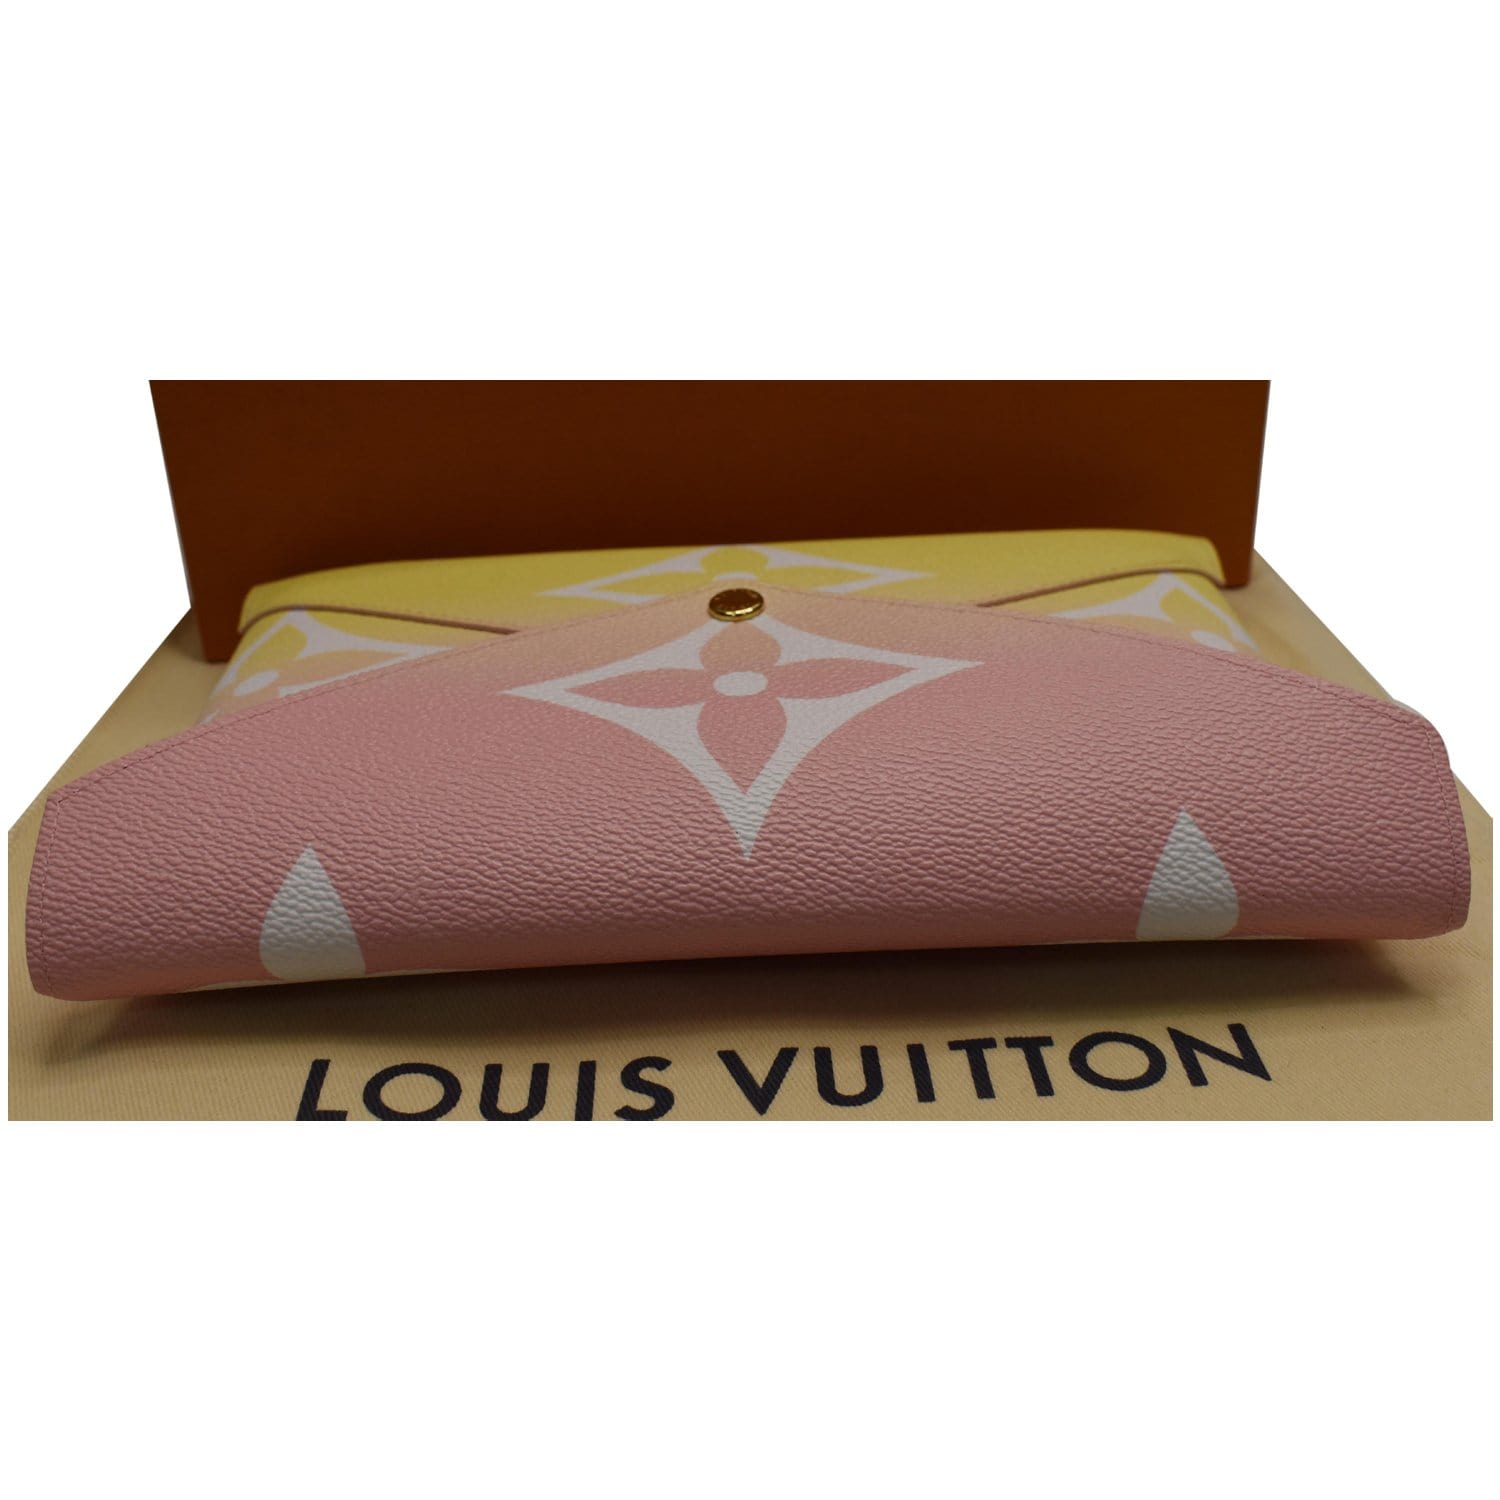 Louis Vuitton Monogram By The Pool Straws & Pouch Set - Pink Tech